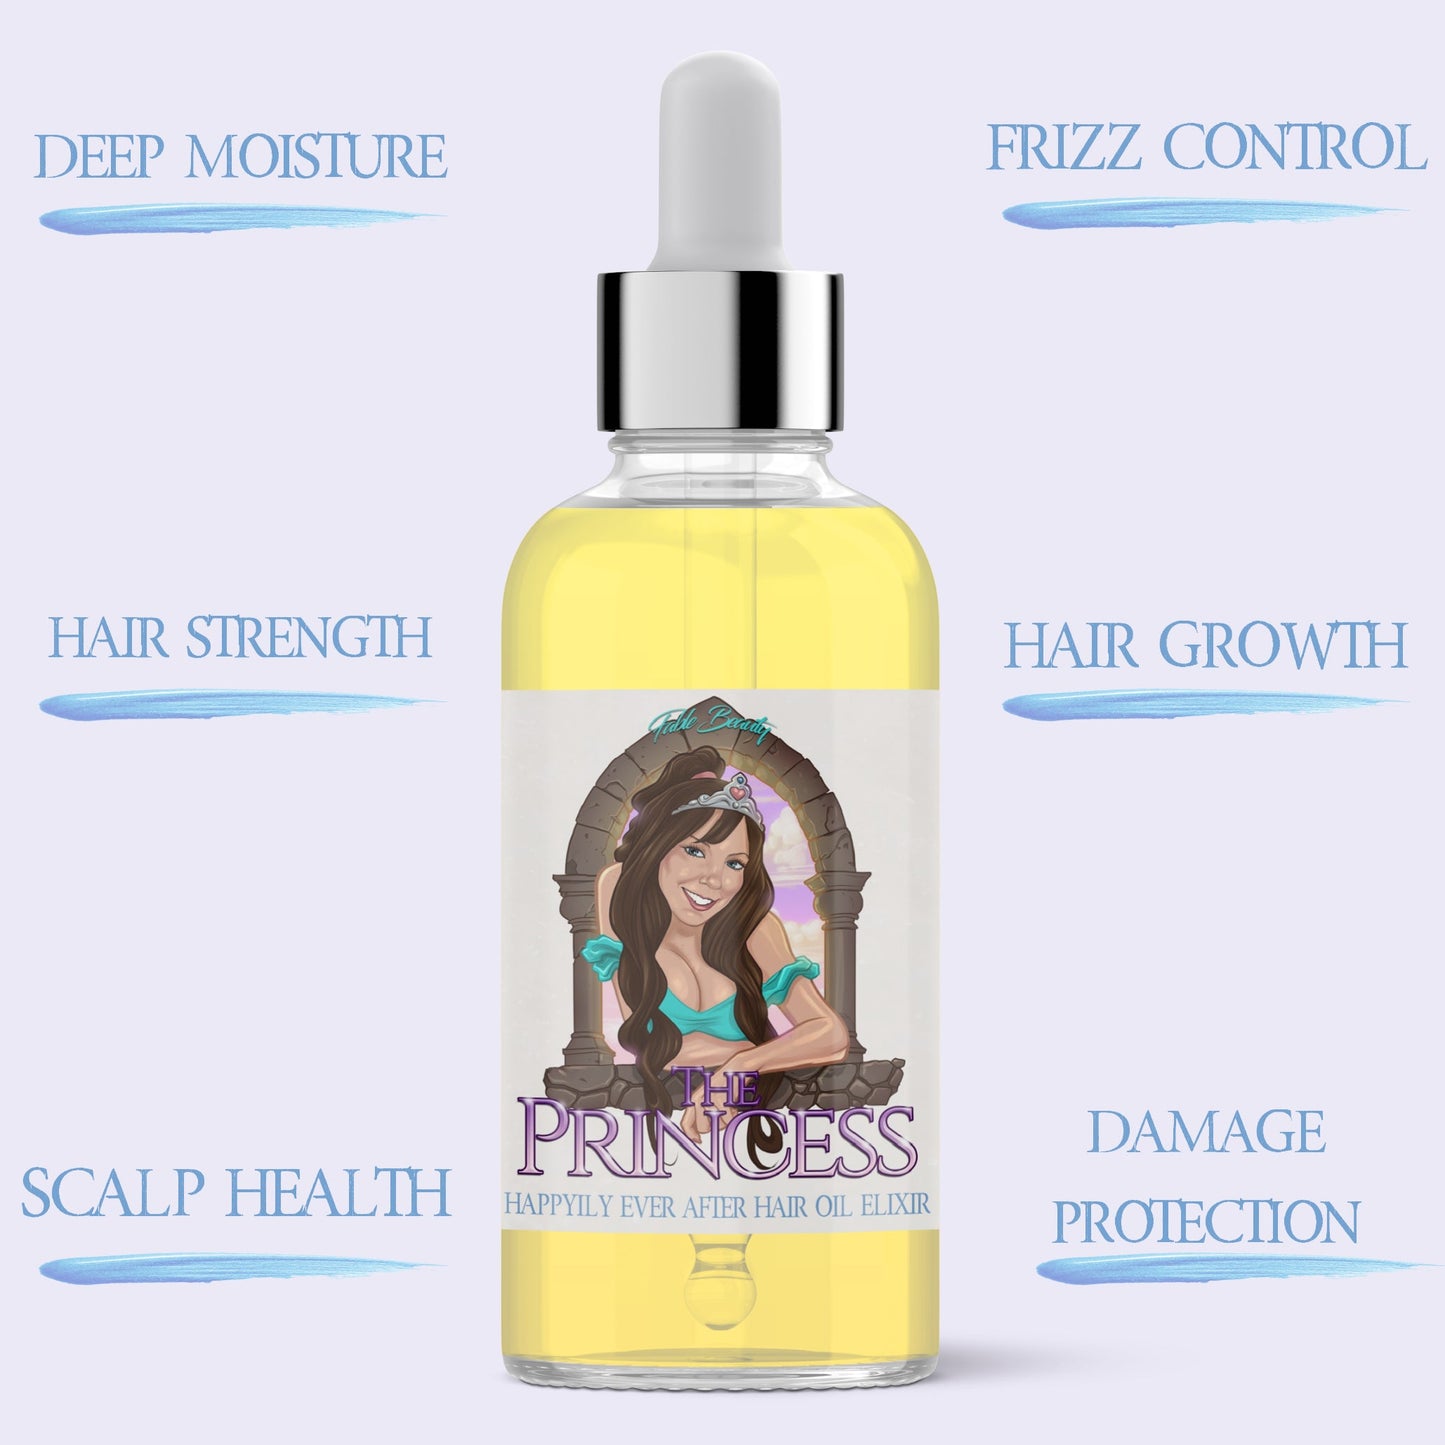 The Princess - Hair Oil Elixir